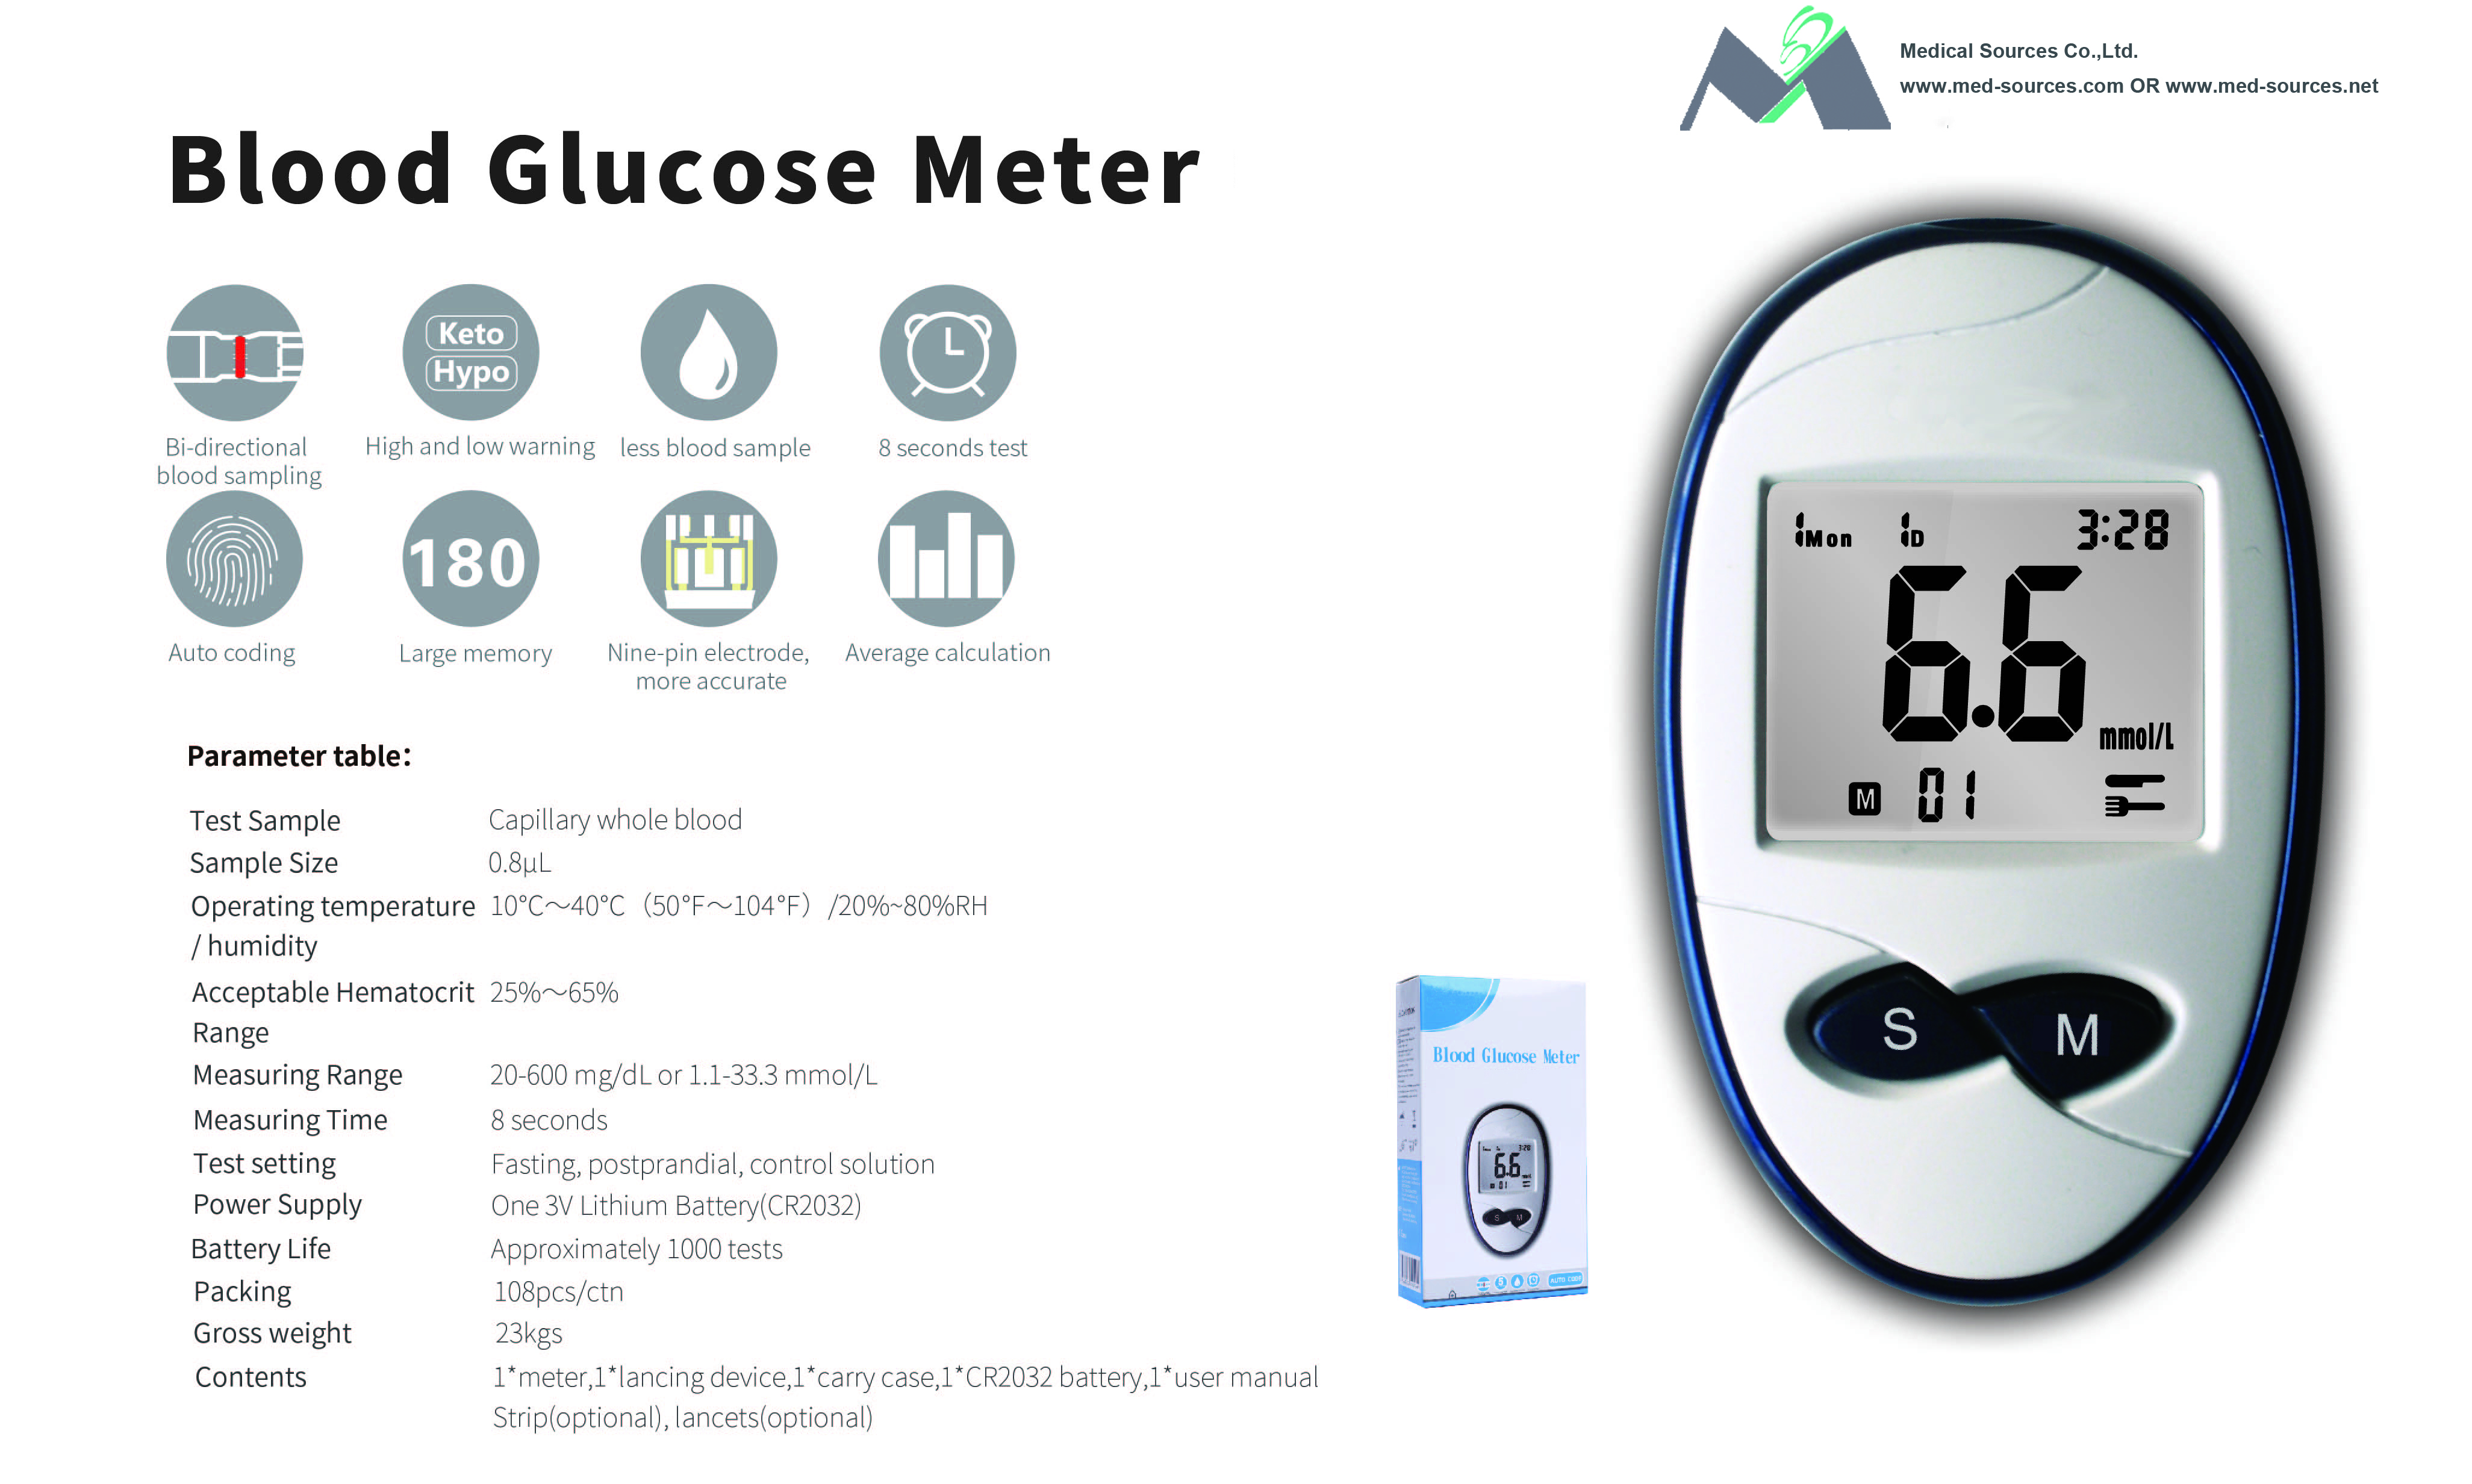 MS-GL100 Blood Glucose Meter